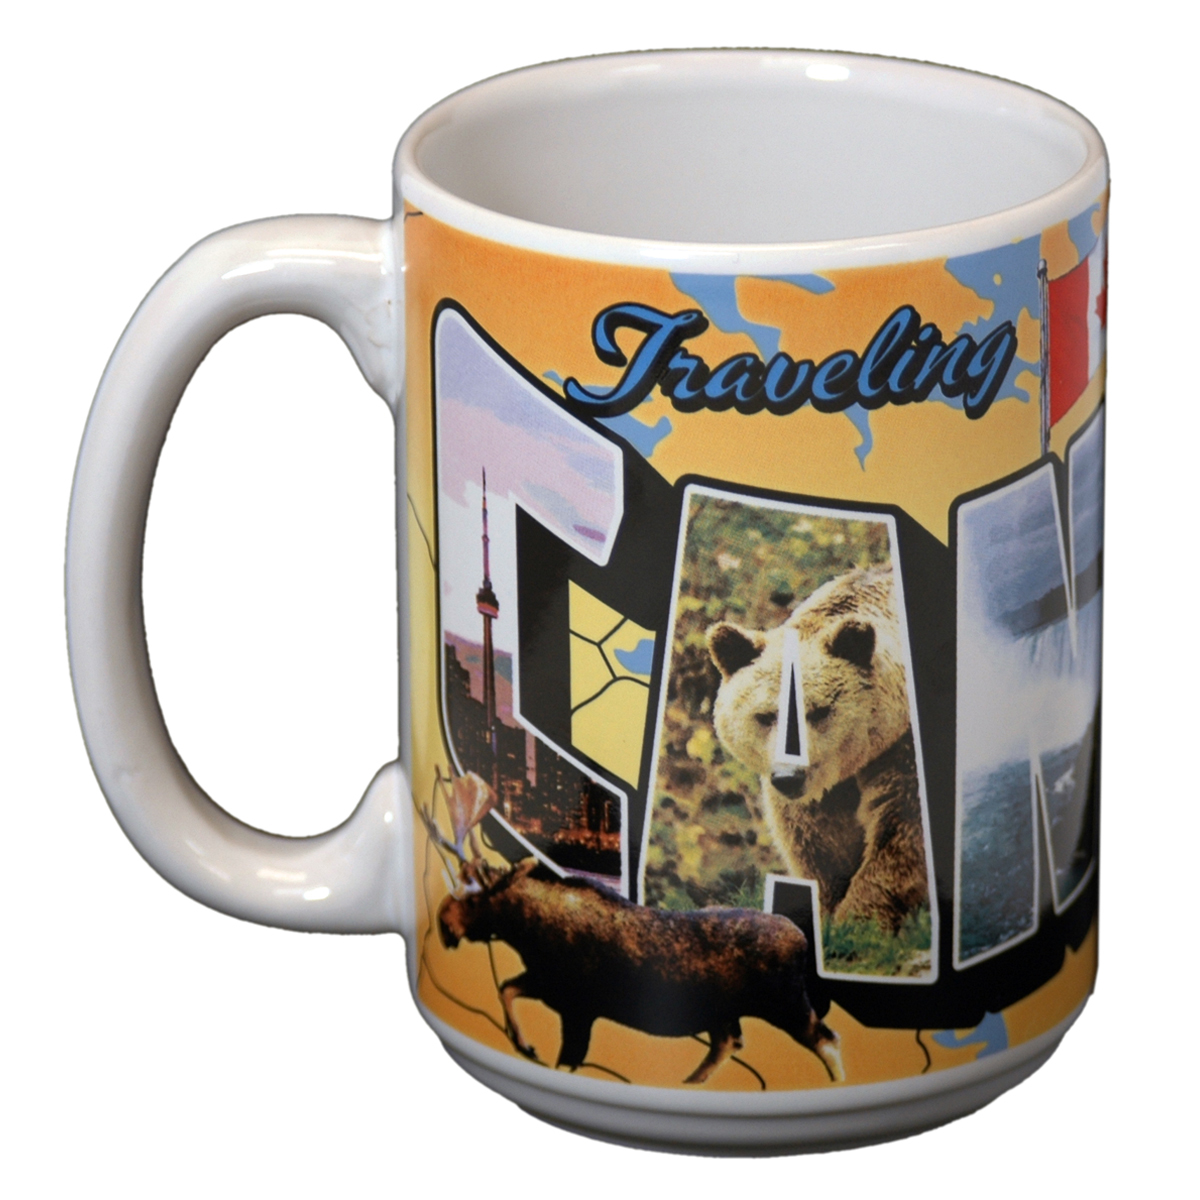 Canada Vintage Postcard Mug 89990JE Fun Canada Souvenir Gifts Coffee Tea Mug Featuring Scenery Canadian Emblems 15-Ounce Capacit